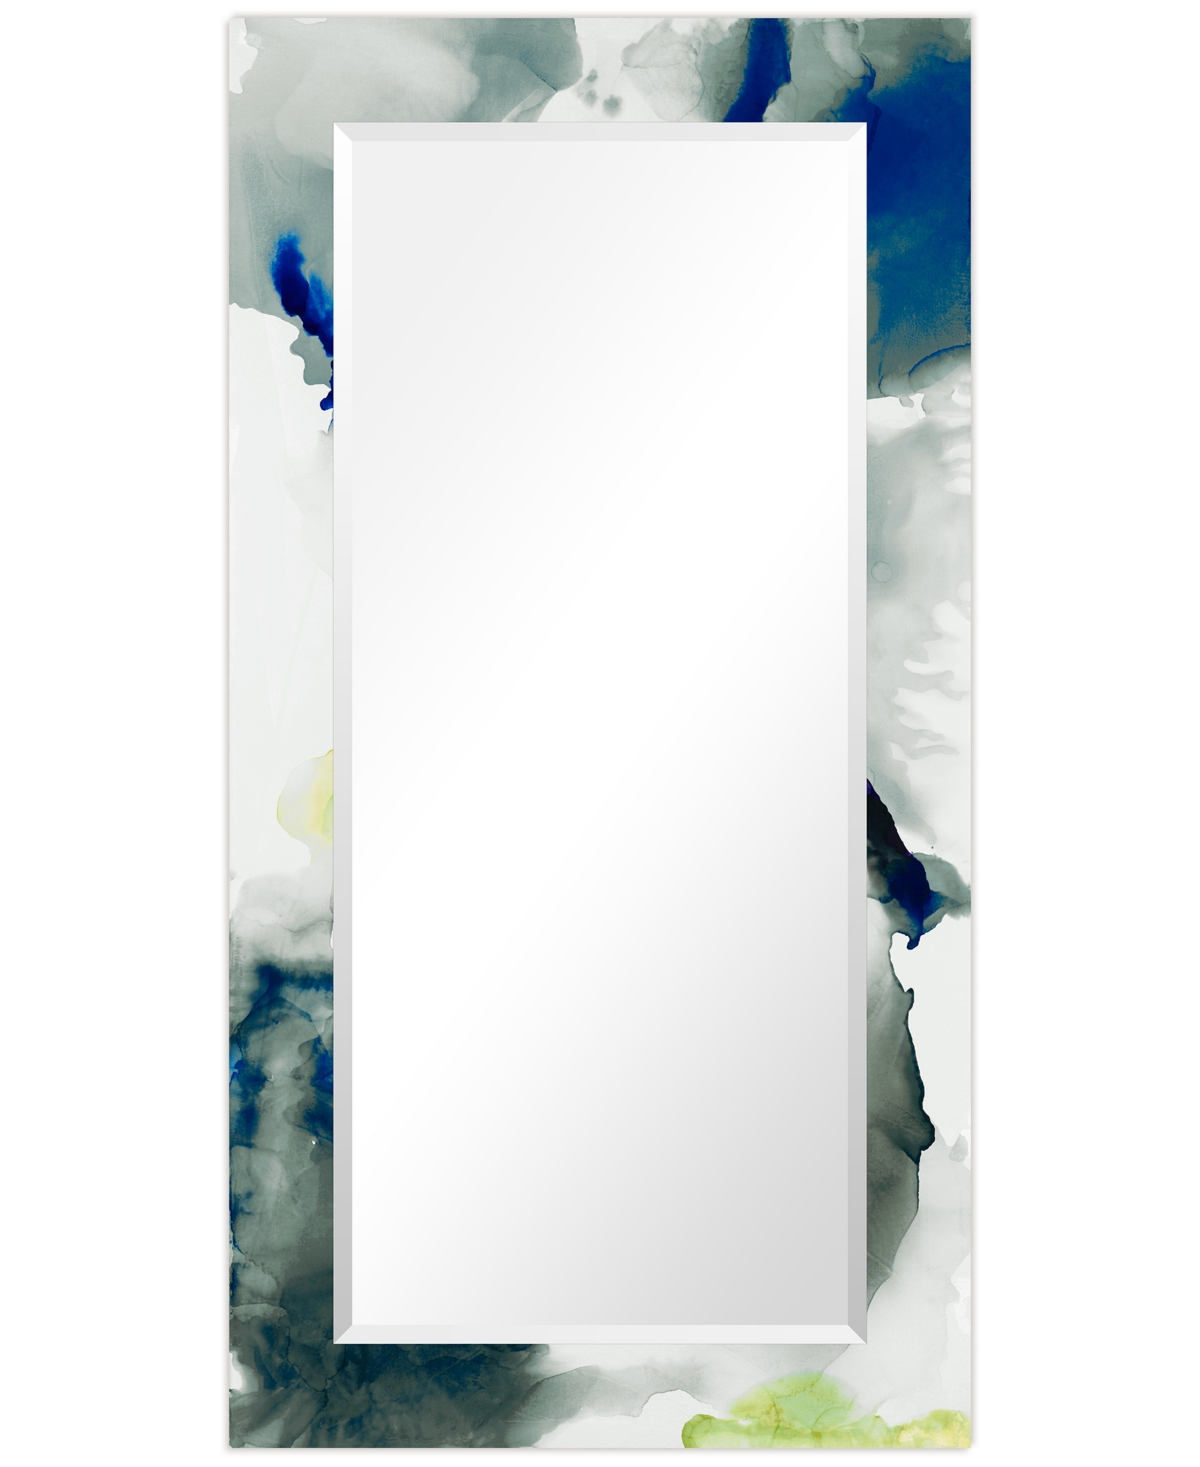 'Ephemeral' Rectangular On Free Floating Printed Tempered Art Glass Beveled Mirror, 54" x 28" - Multicolor